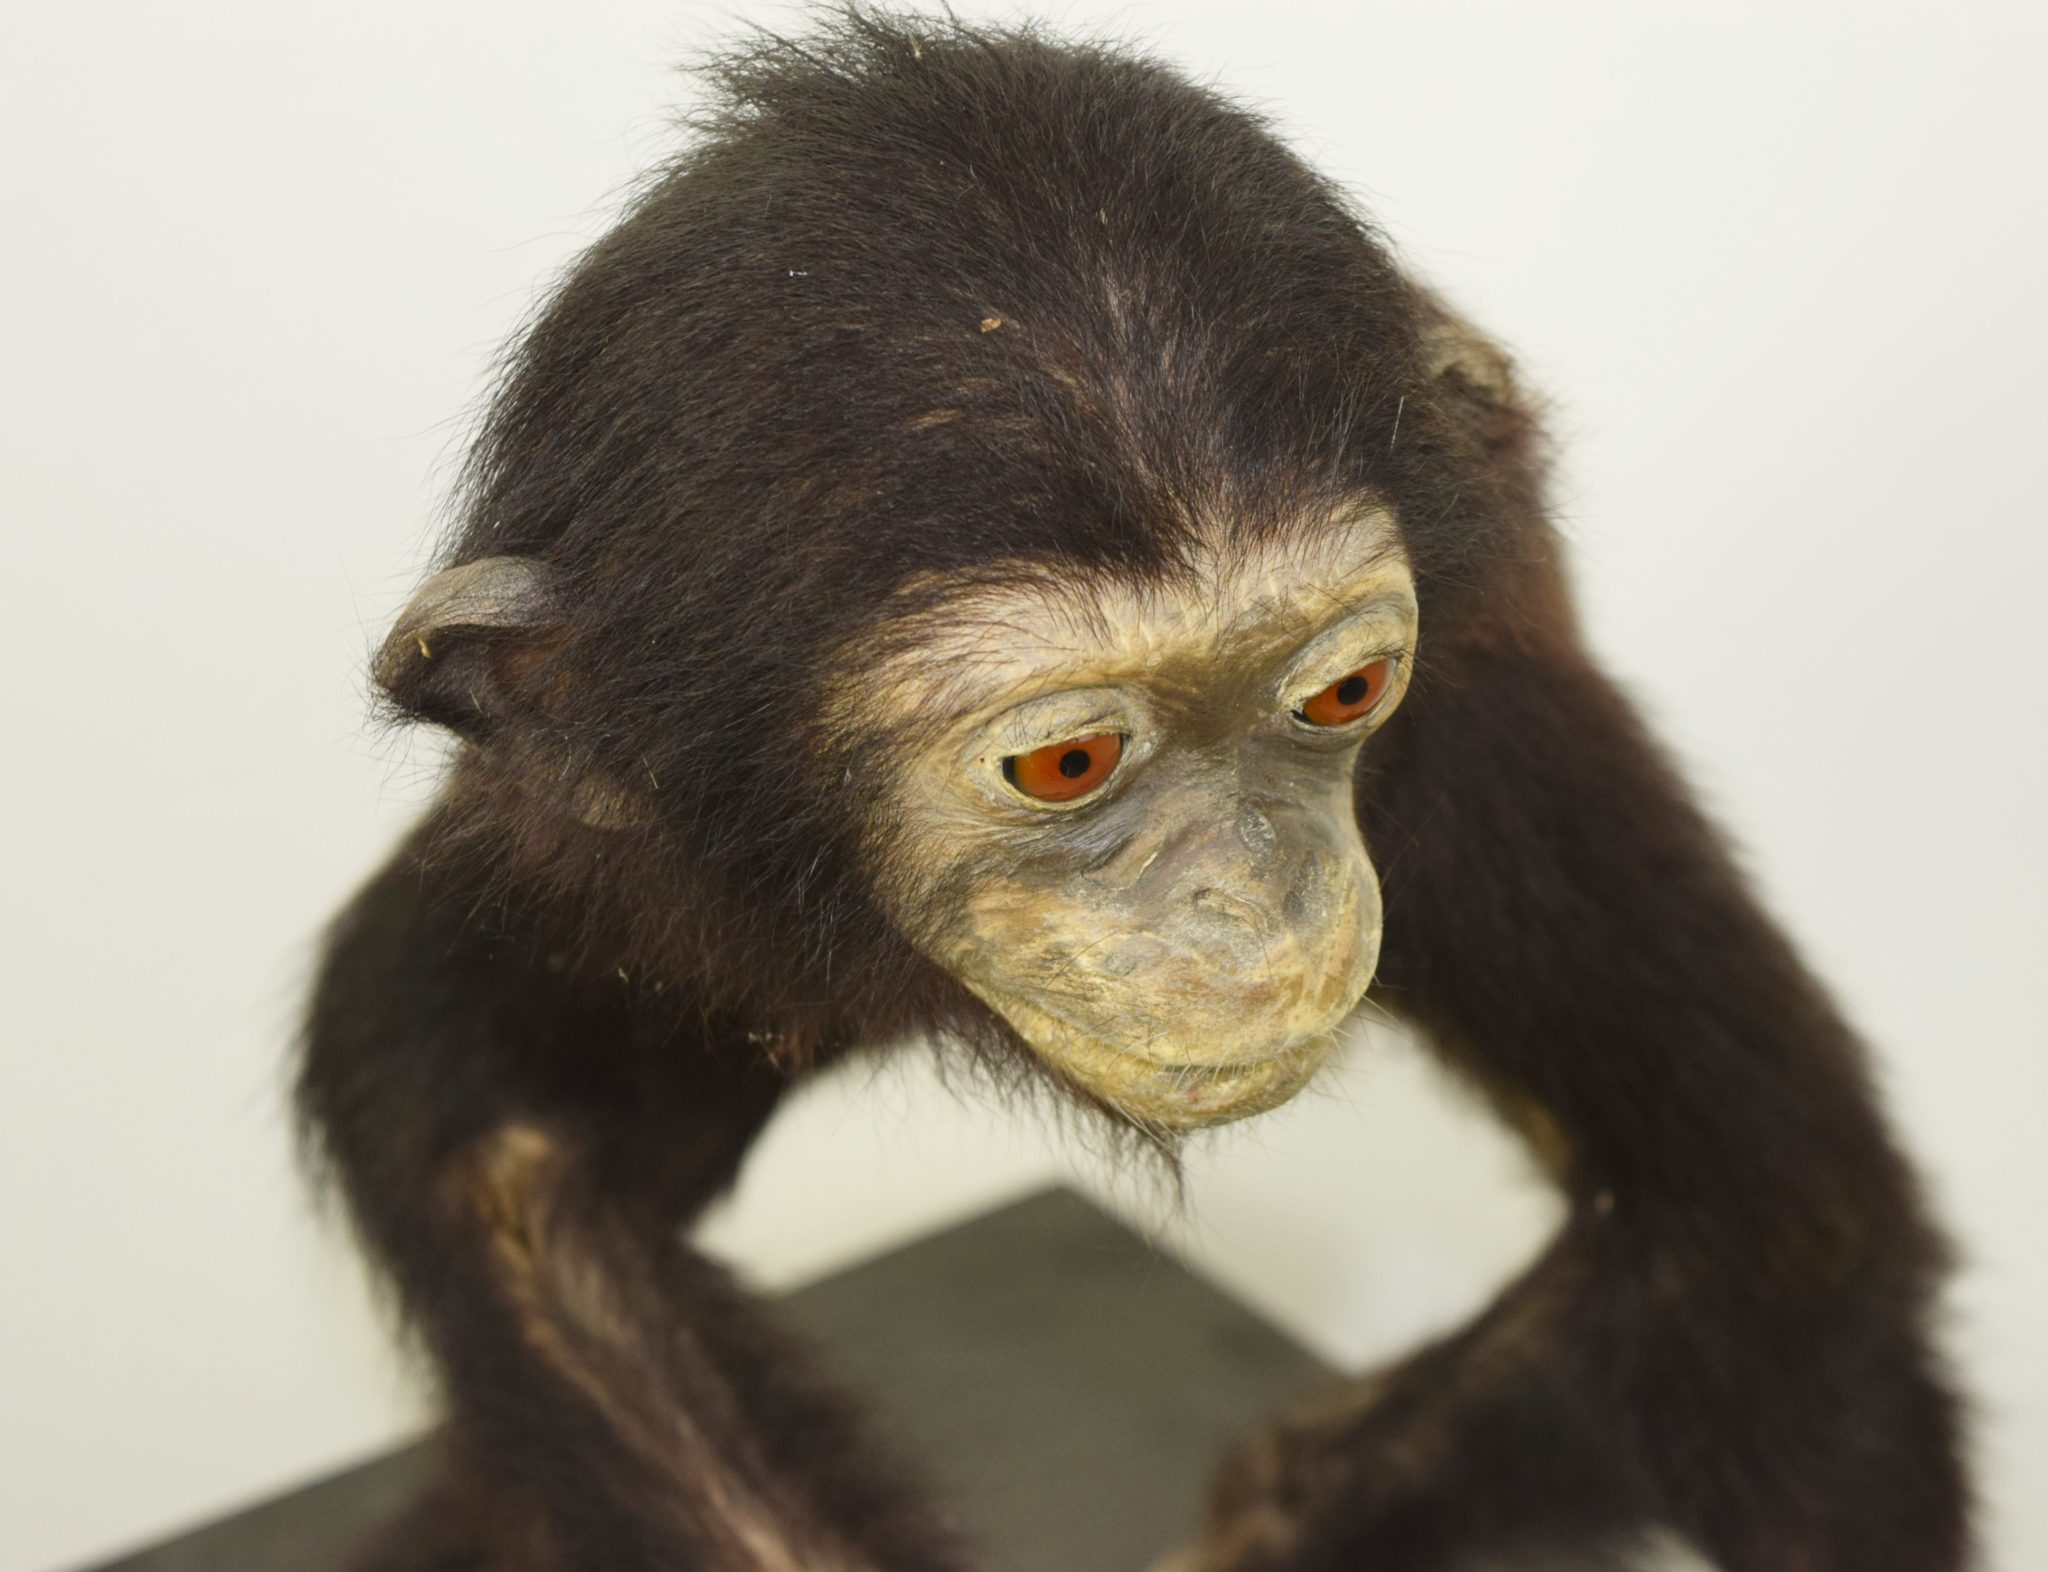 chimpanzee scientific name